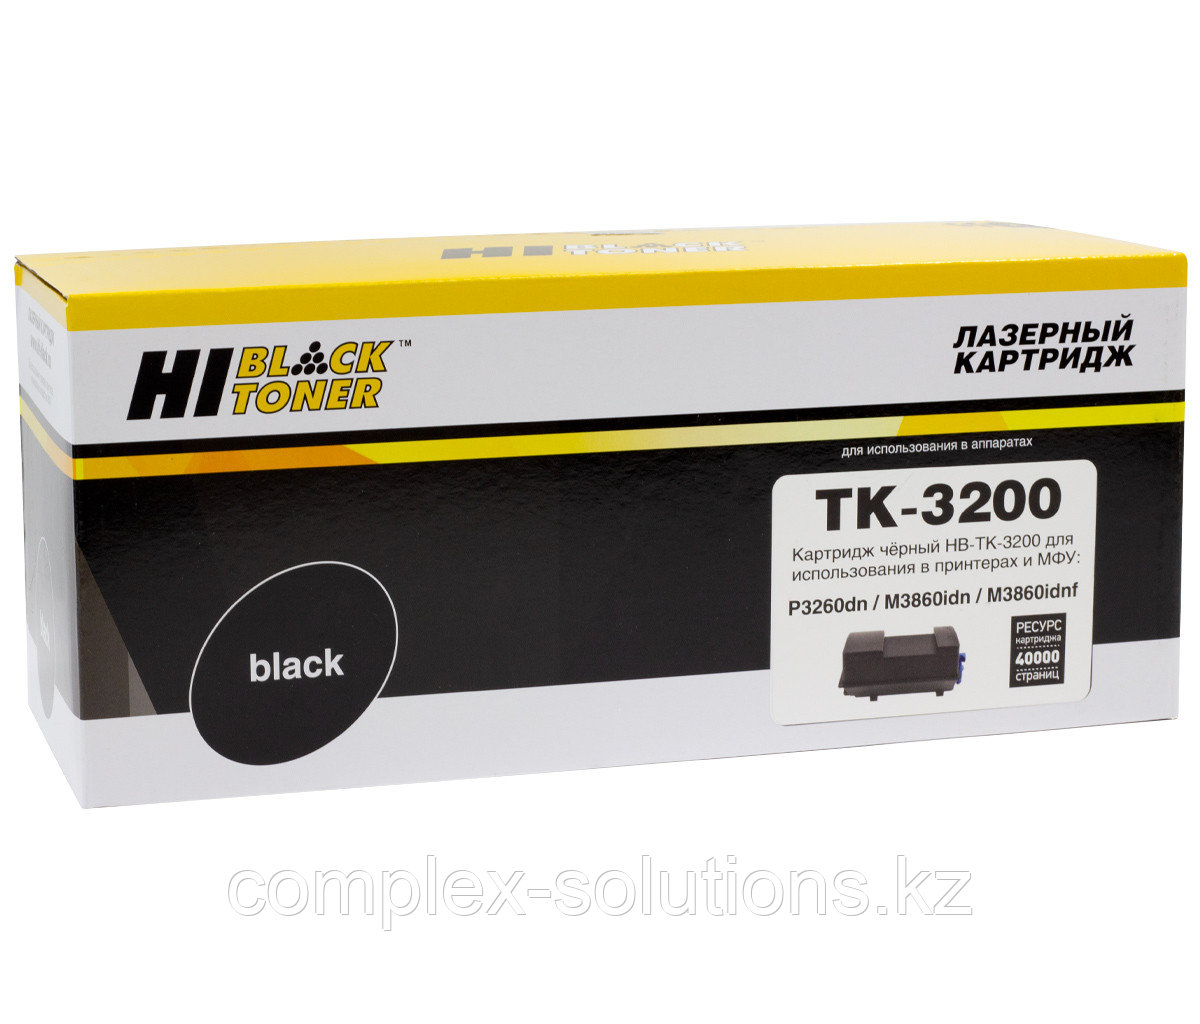 Тонер картридж Hi-Black [TK-3200] для Kyocera Ecosys P3260dn | M3860idn | M3860idnf, 40K | [качественный